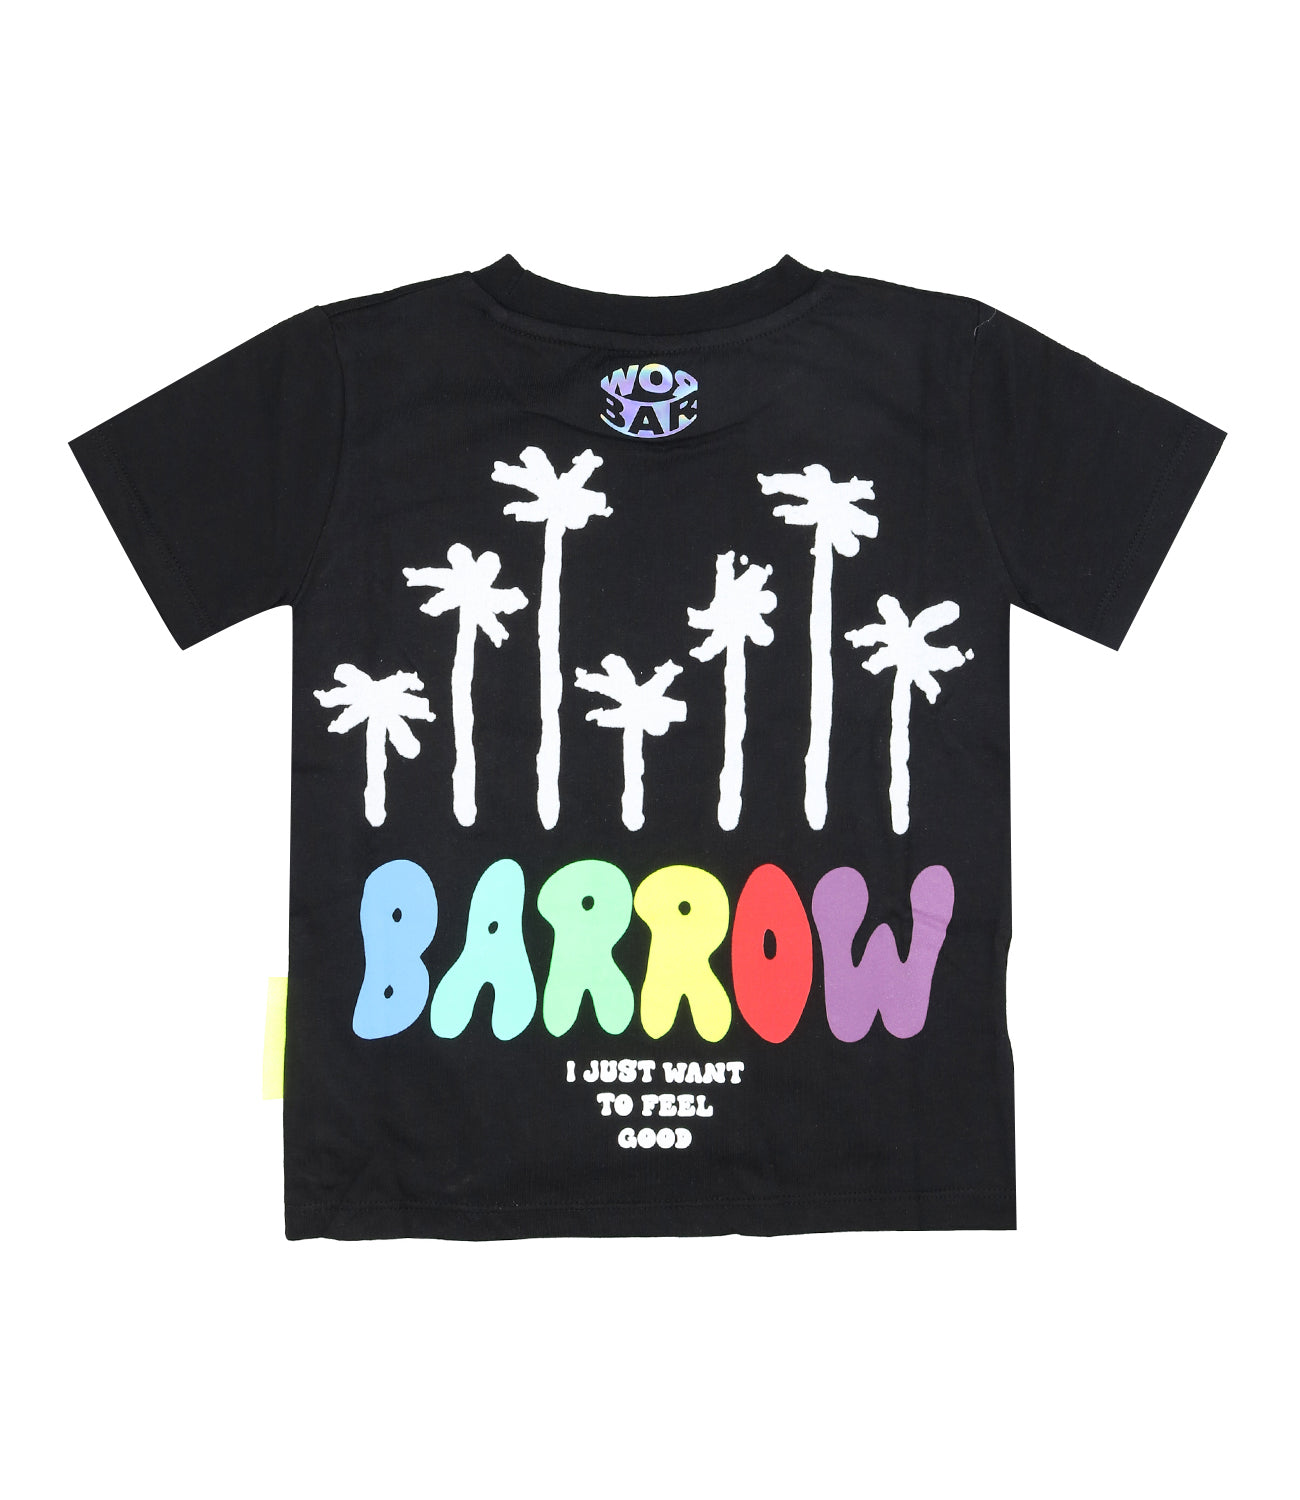 Barrow Kids | T-Shirt Nero